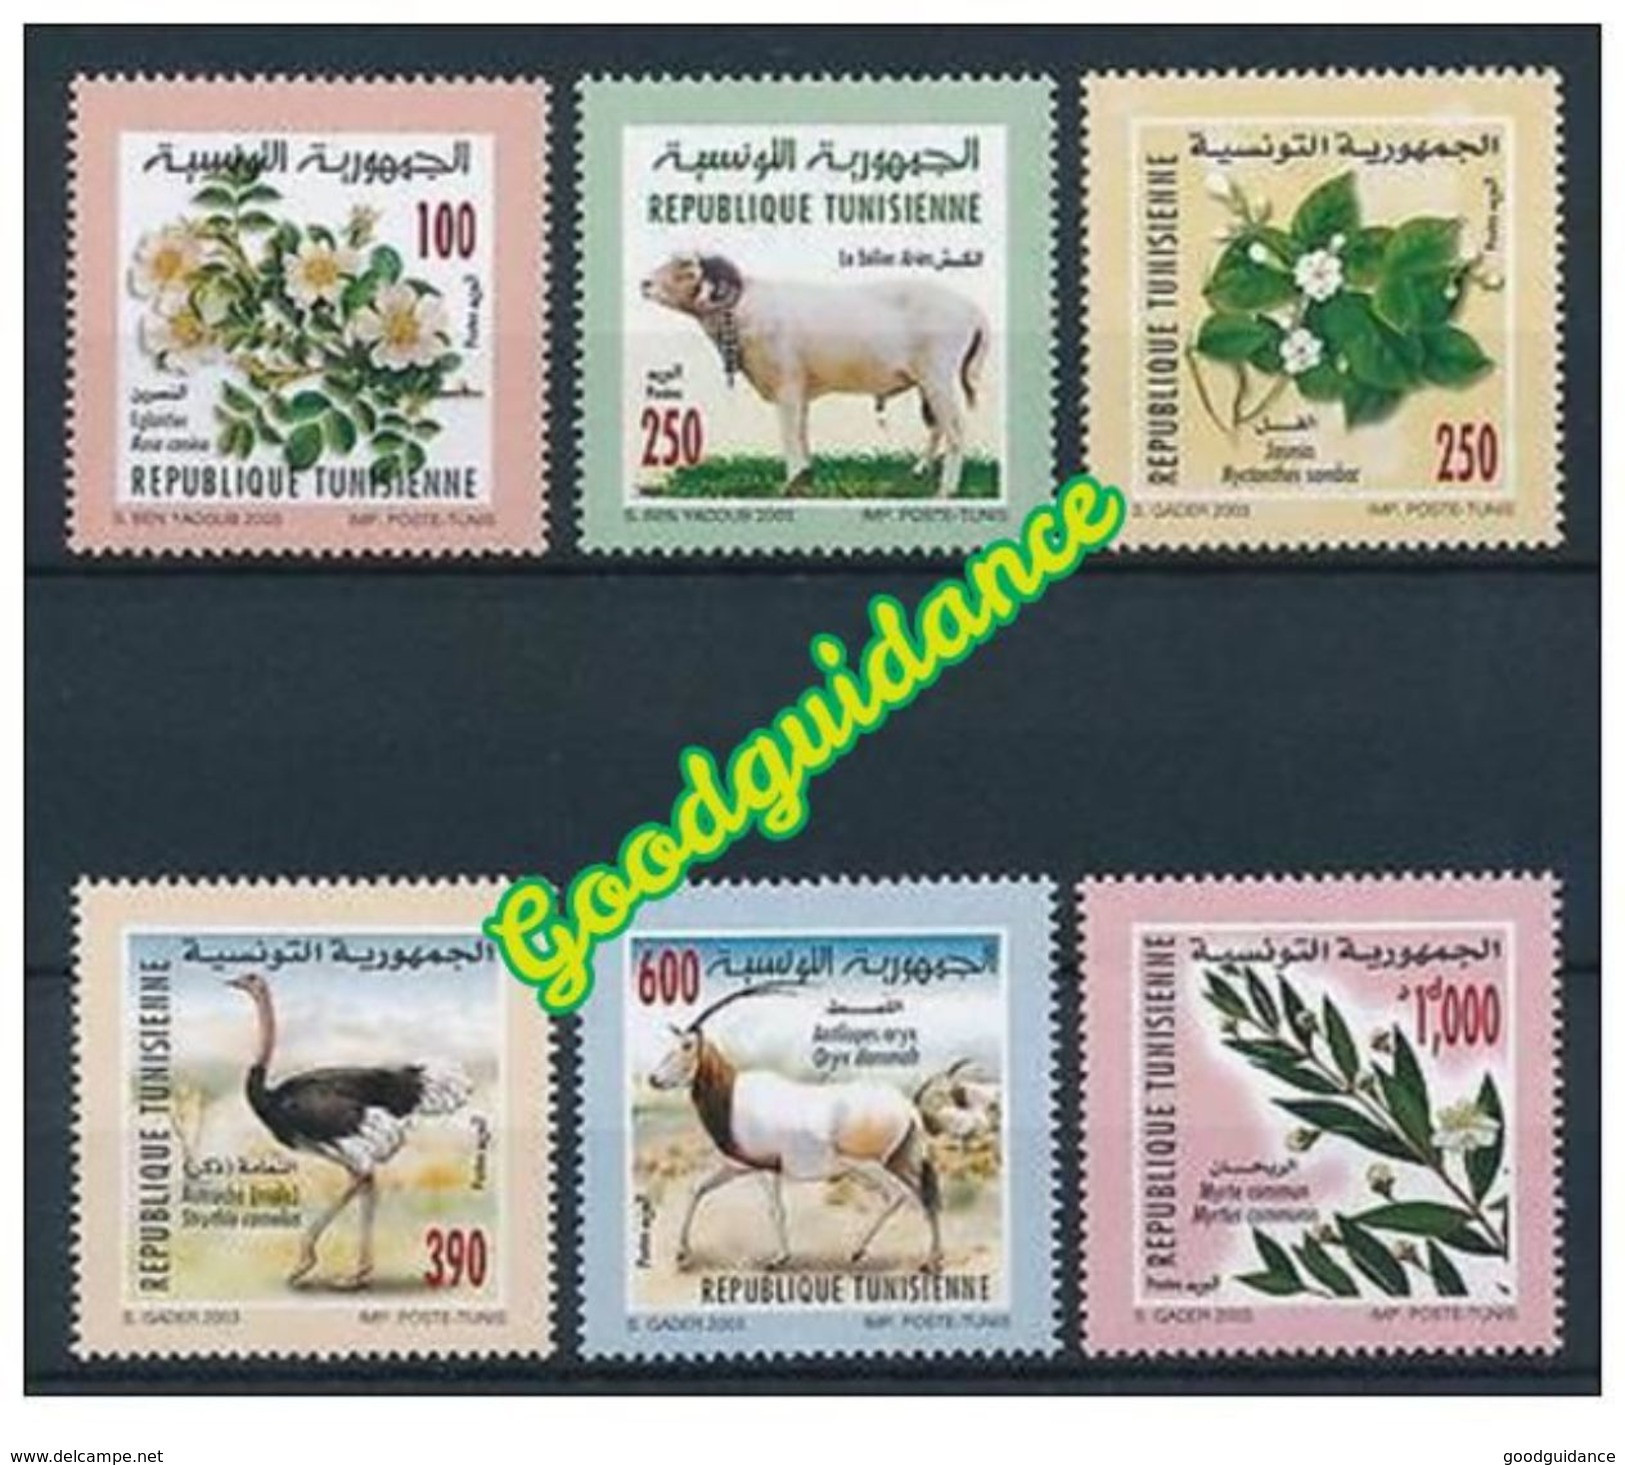 2003- Tunisia- Fauna And Flora: Wild Dog Rose, Jasmine, Ram, Ostrich, Antelope Oryx, Myrtle- Complete Set 3v.MNH** - Tunesië (1956-...)